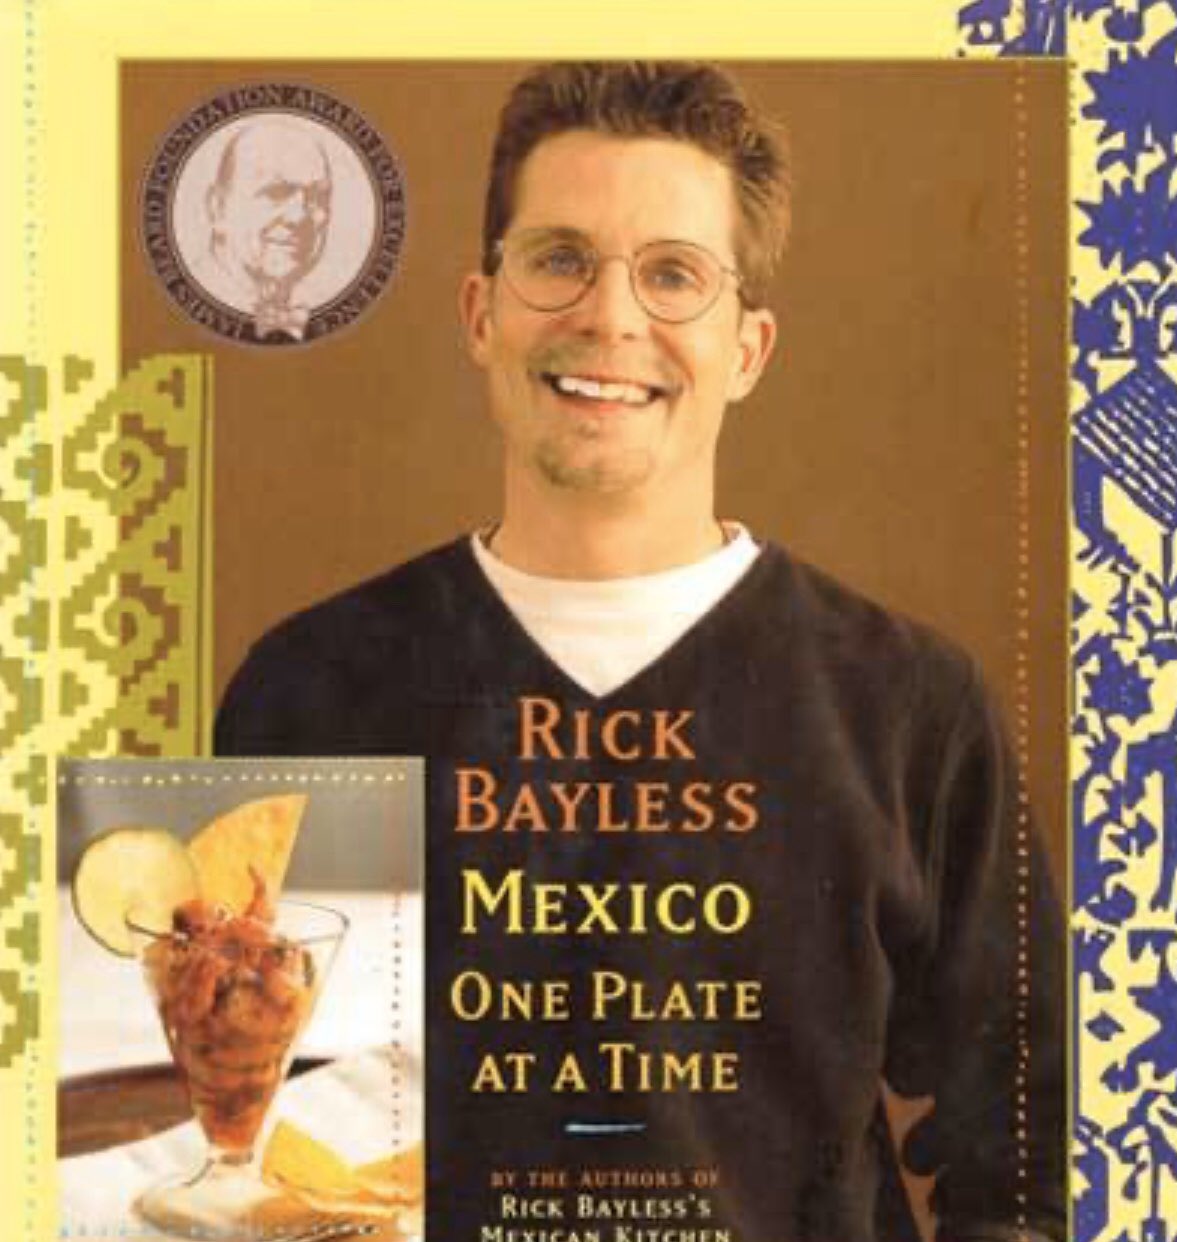 Happy Birthday to Rick Bayless -- chef, cookbook author, and Cookbook Village customer favorite! 